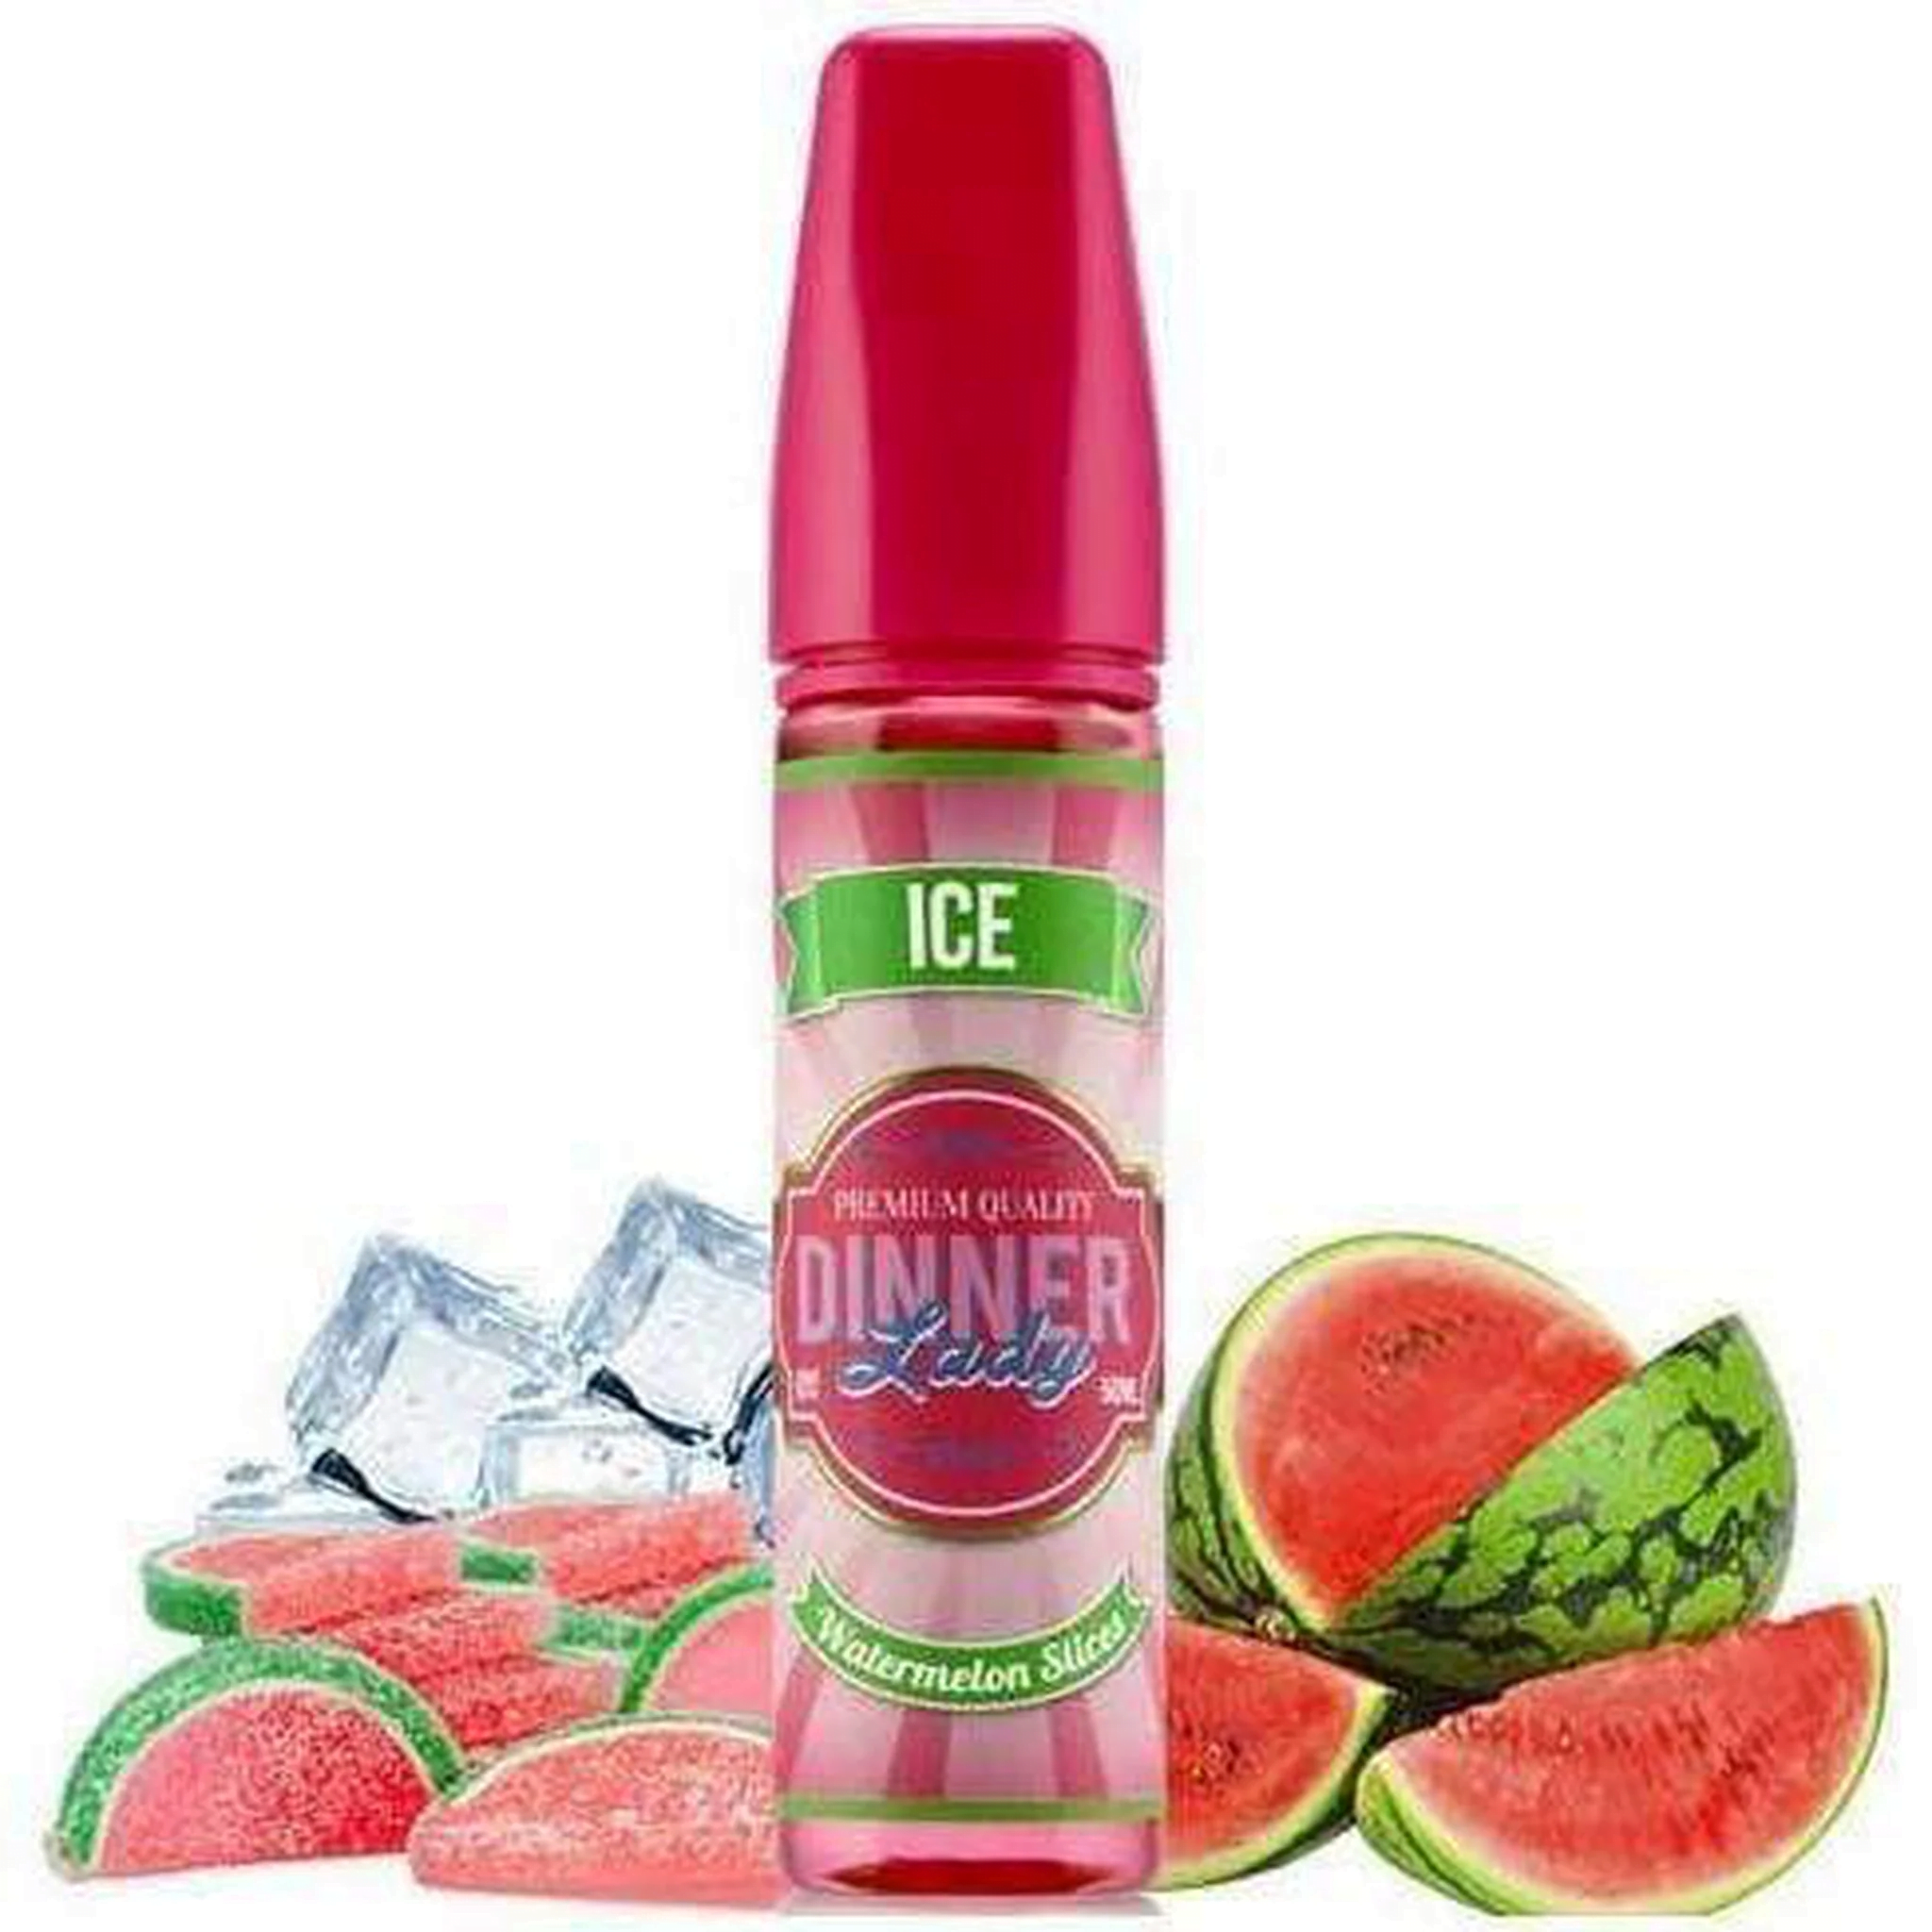 watermelon-slices-ice-by-dinner-lady-tuck-shop-e-liquid-60ml-14395698249794